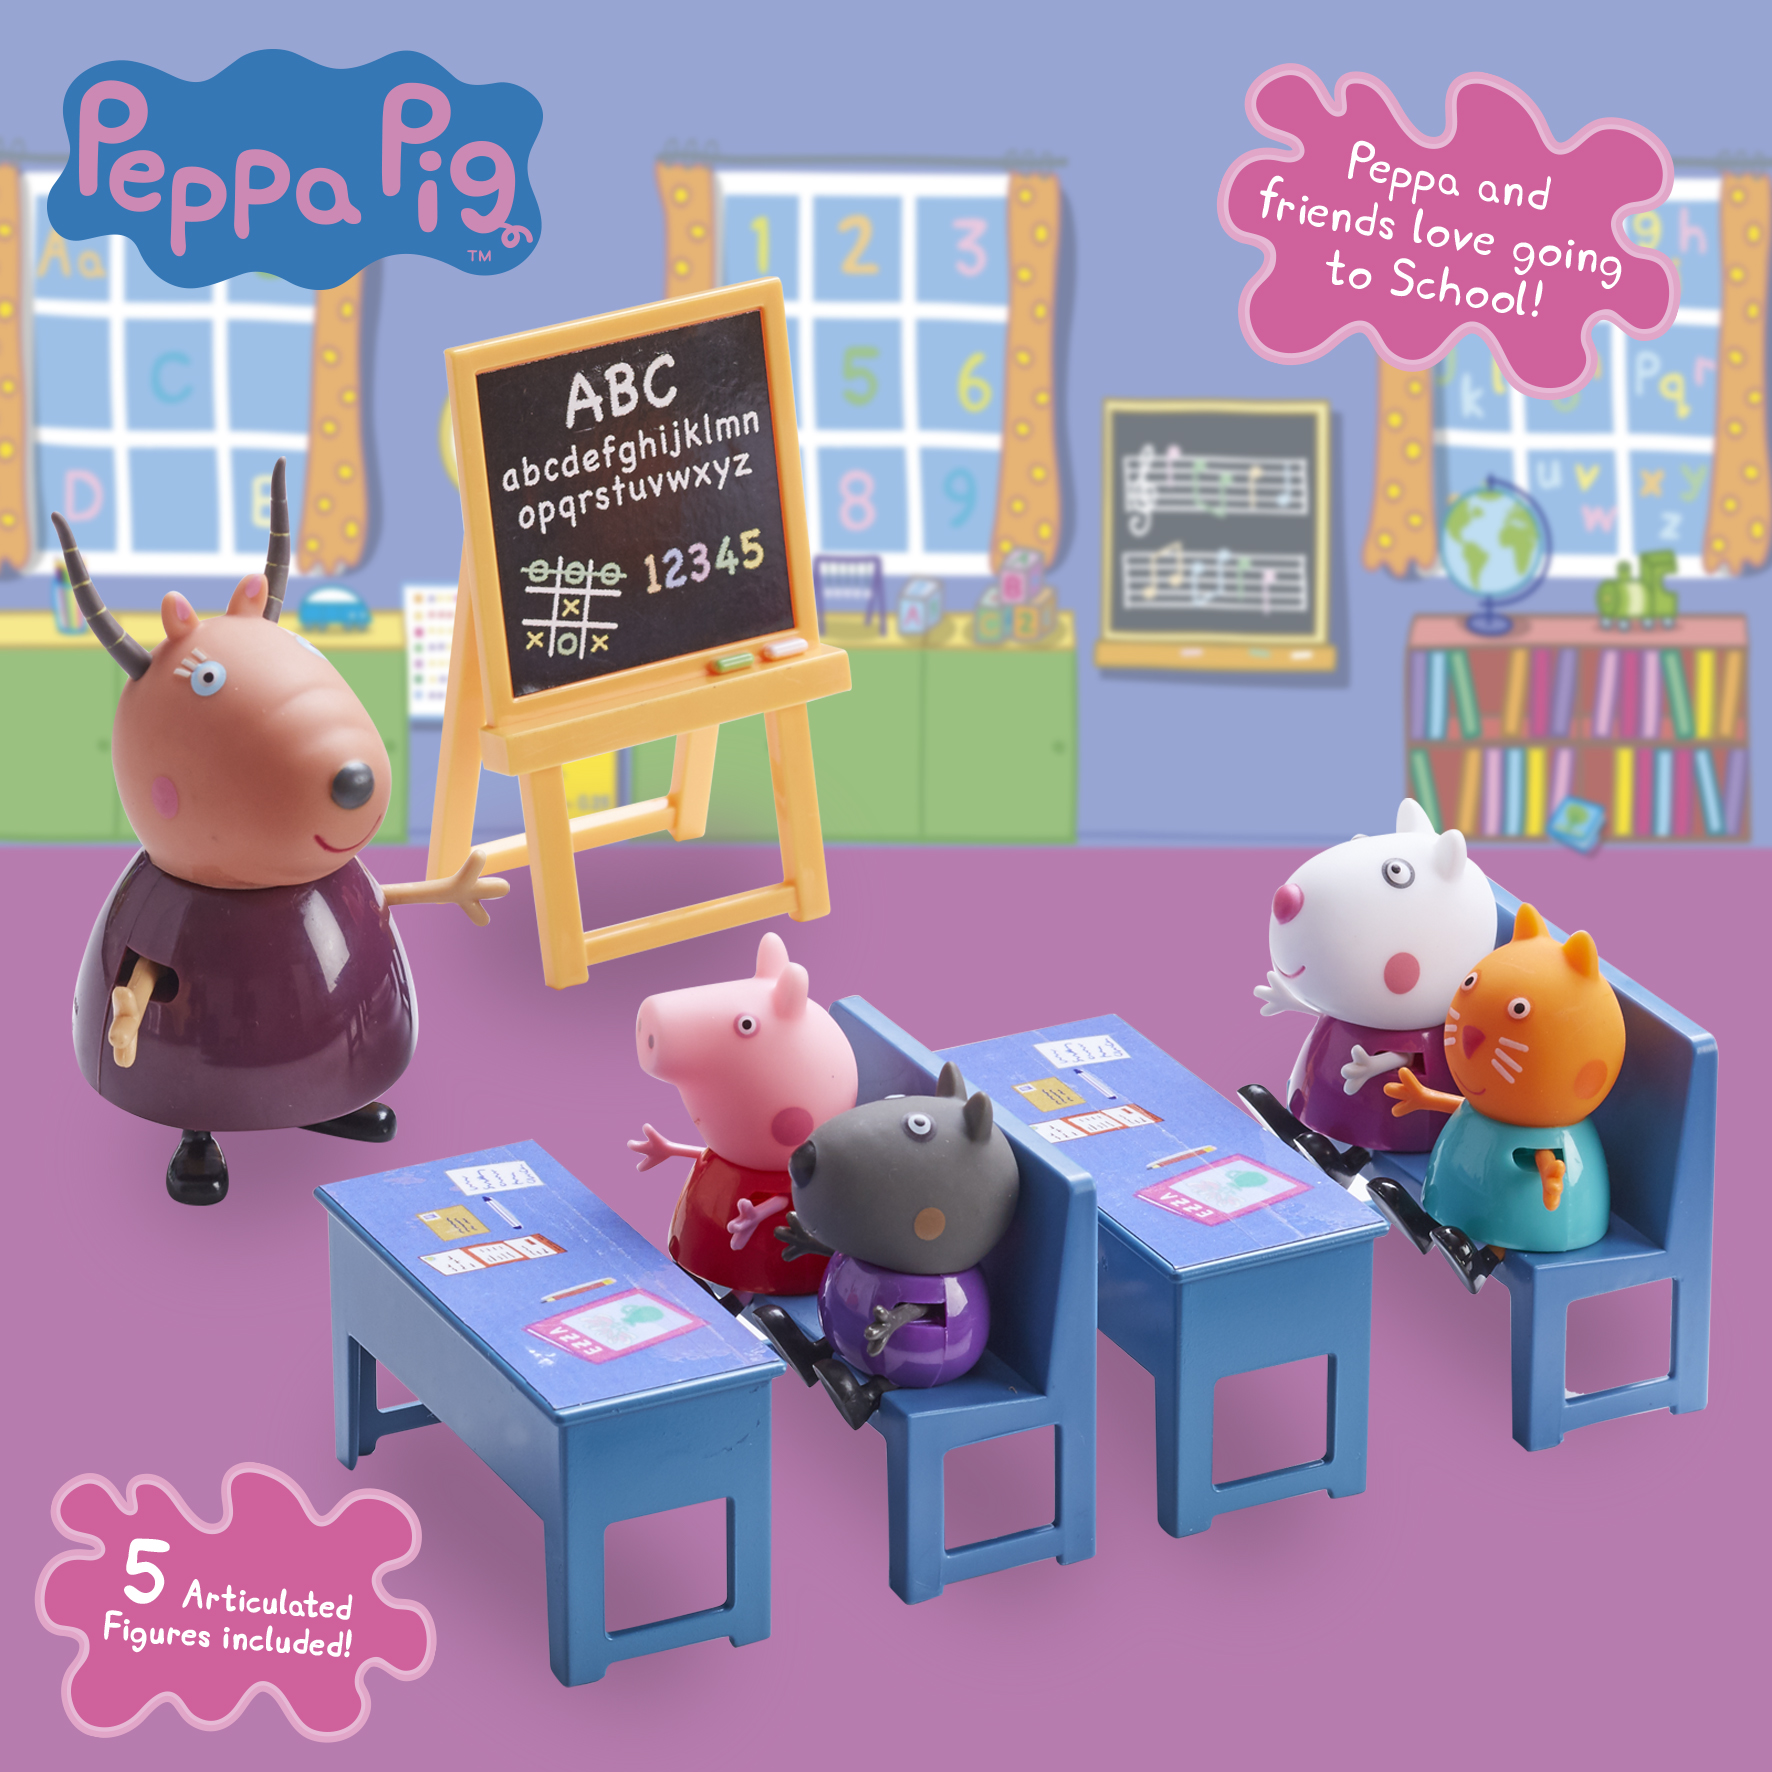 Peppa Pig's Classroom